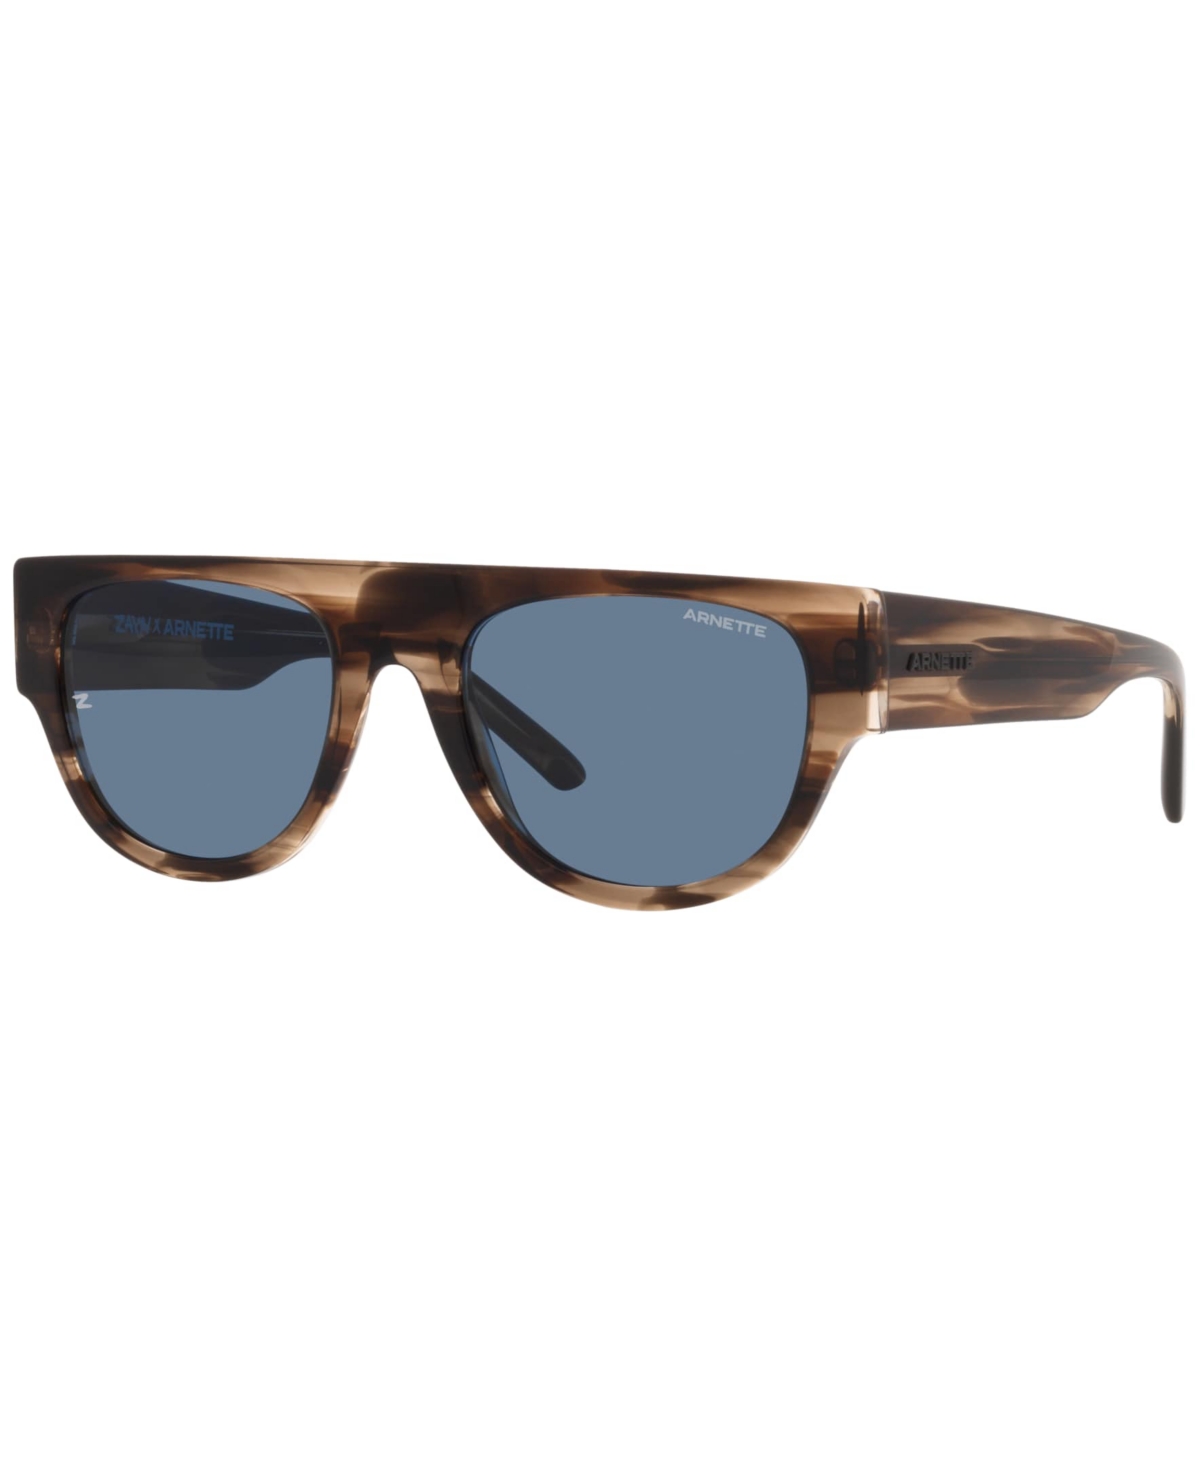 Unisex Sunglasses, AN4293 Gto 53 - Tie-Dye Brown